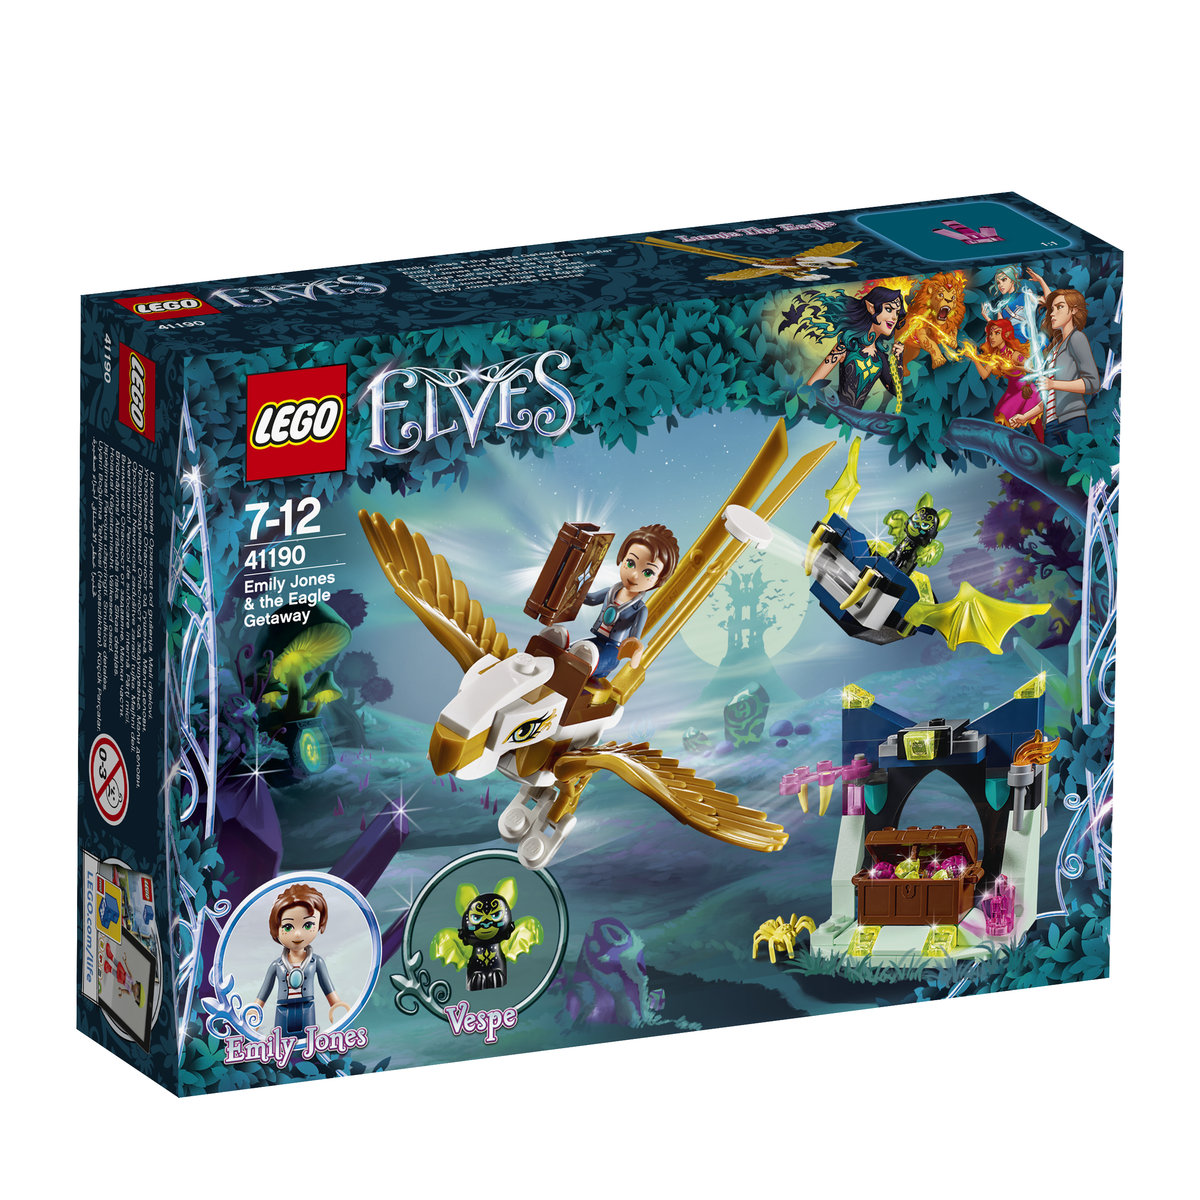 LEGO ELVES EMILY JONES I UCIECZKA ORŁA 41190